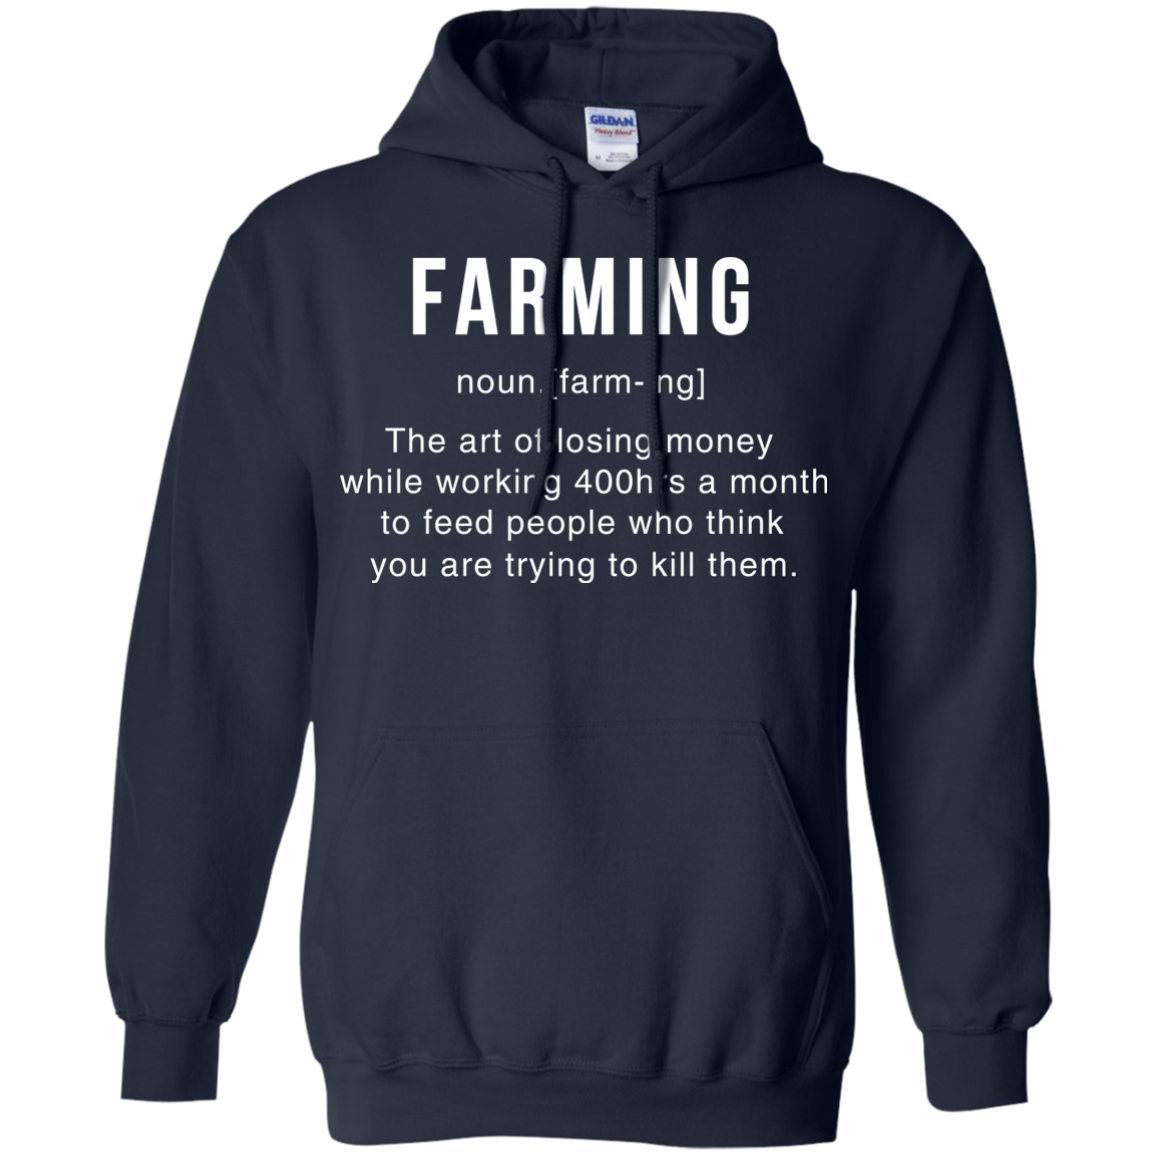 Farming definition shirt Farmer shirts - ifrogtees